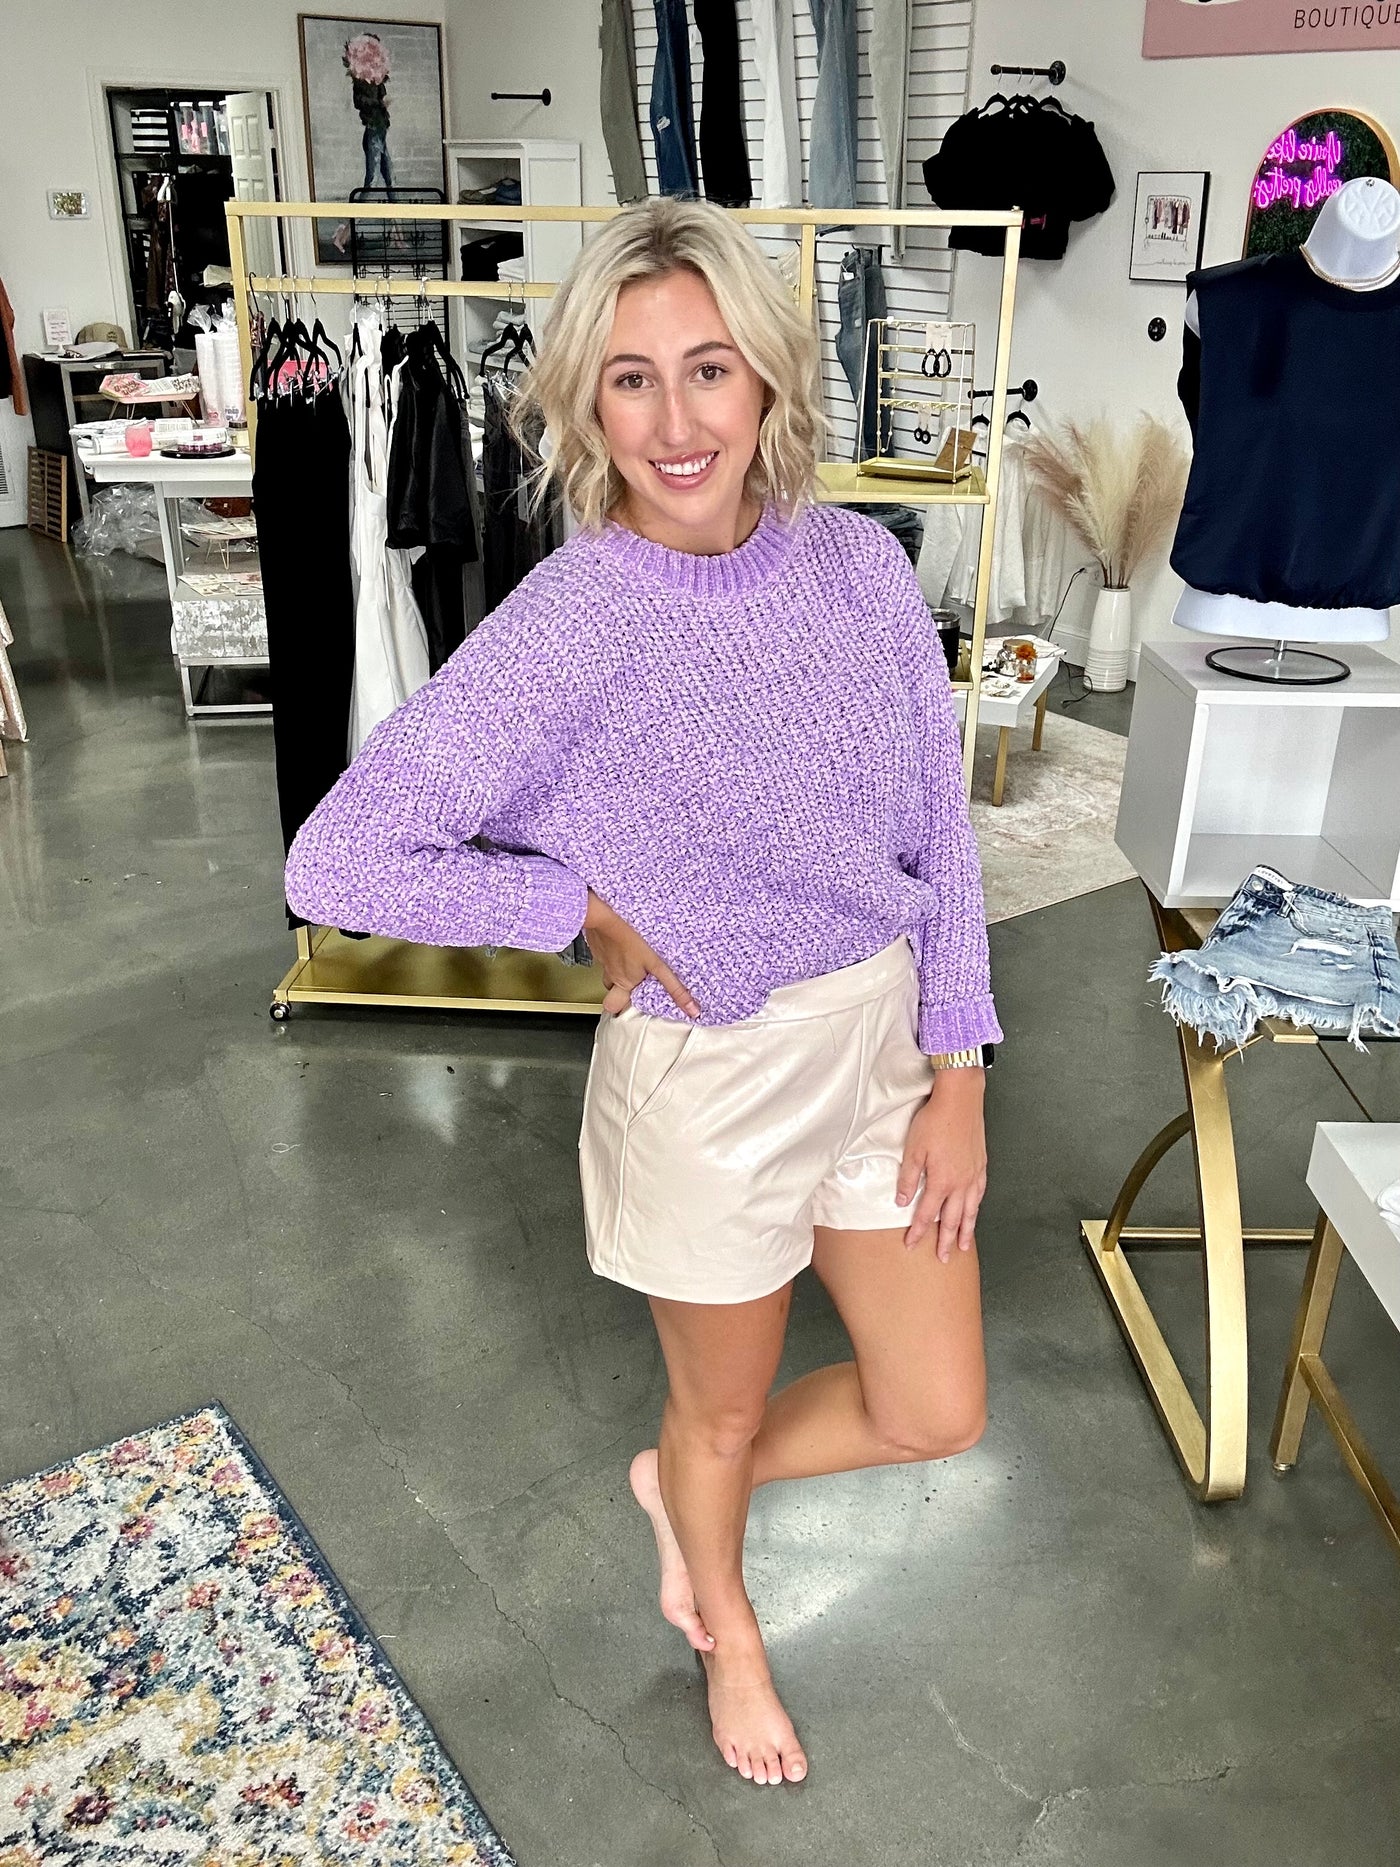 Lavender Dreams Sweater